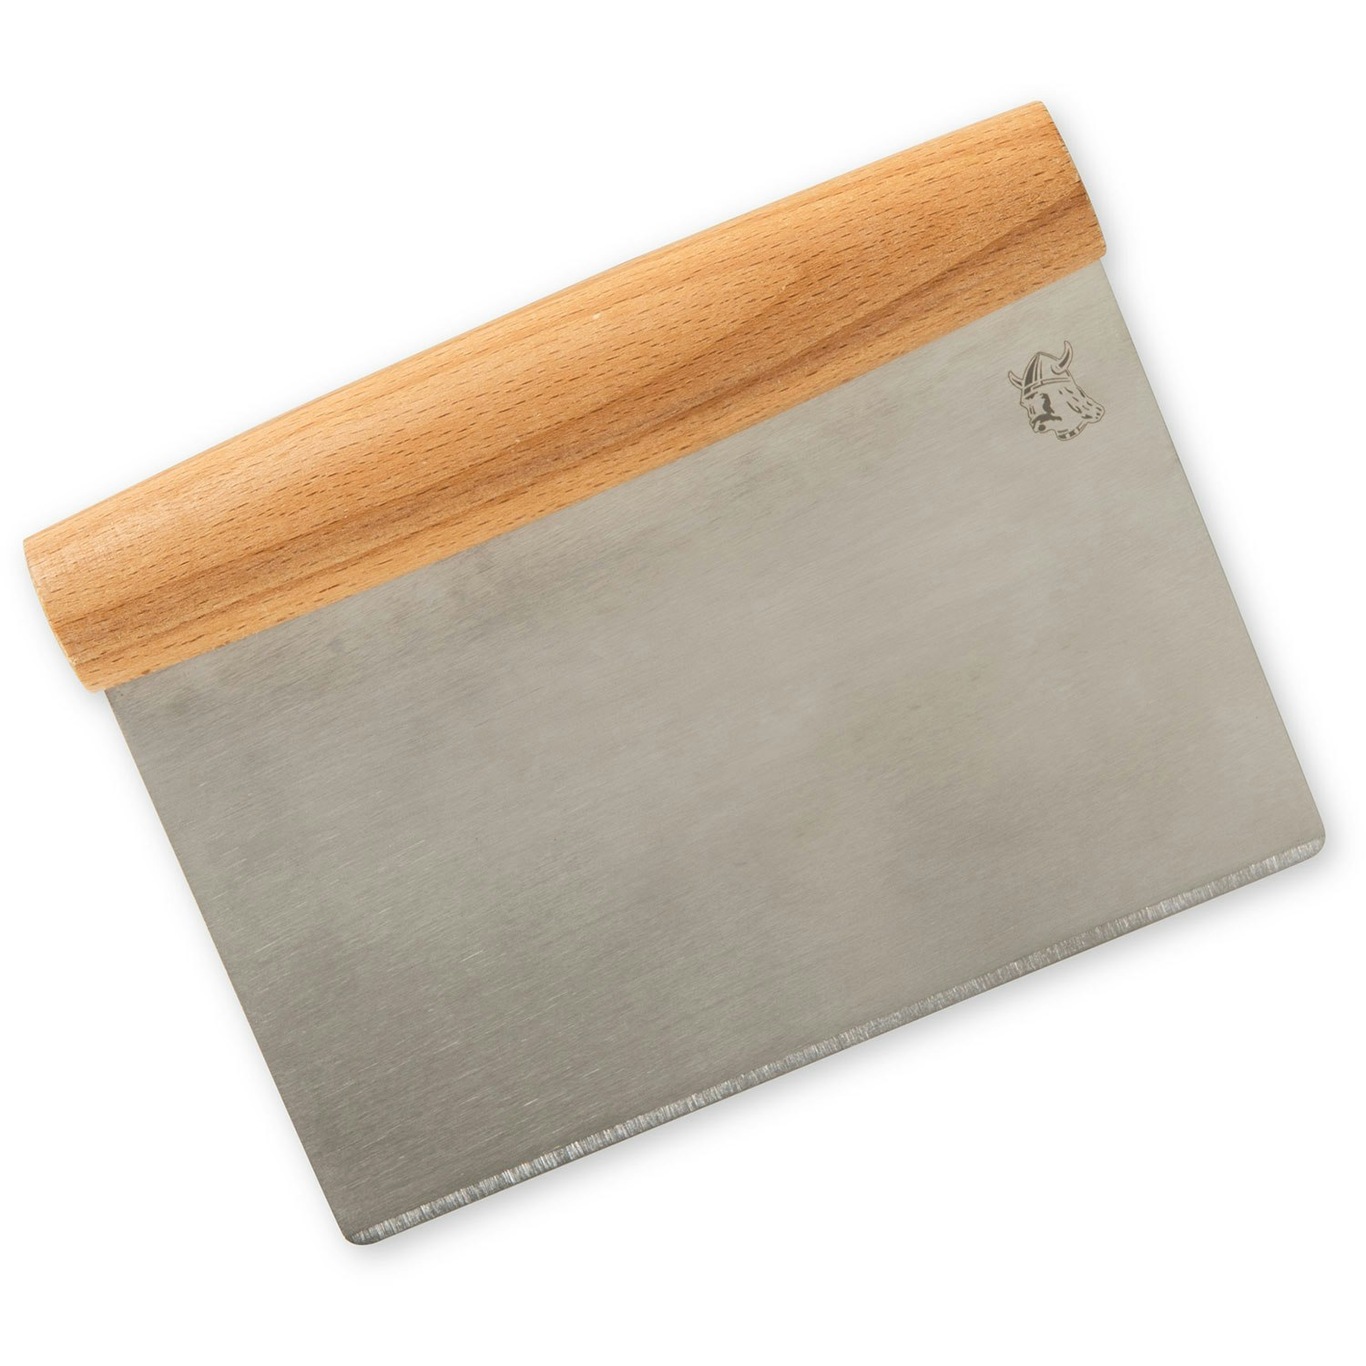 https://royaldesign.com/image/2/nordic-ware-dough-scraper-with-wooden-handle-0?w=800&quality=80